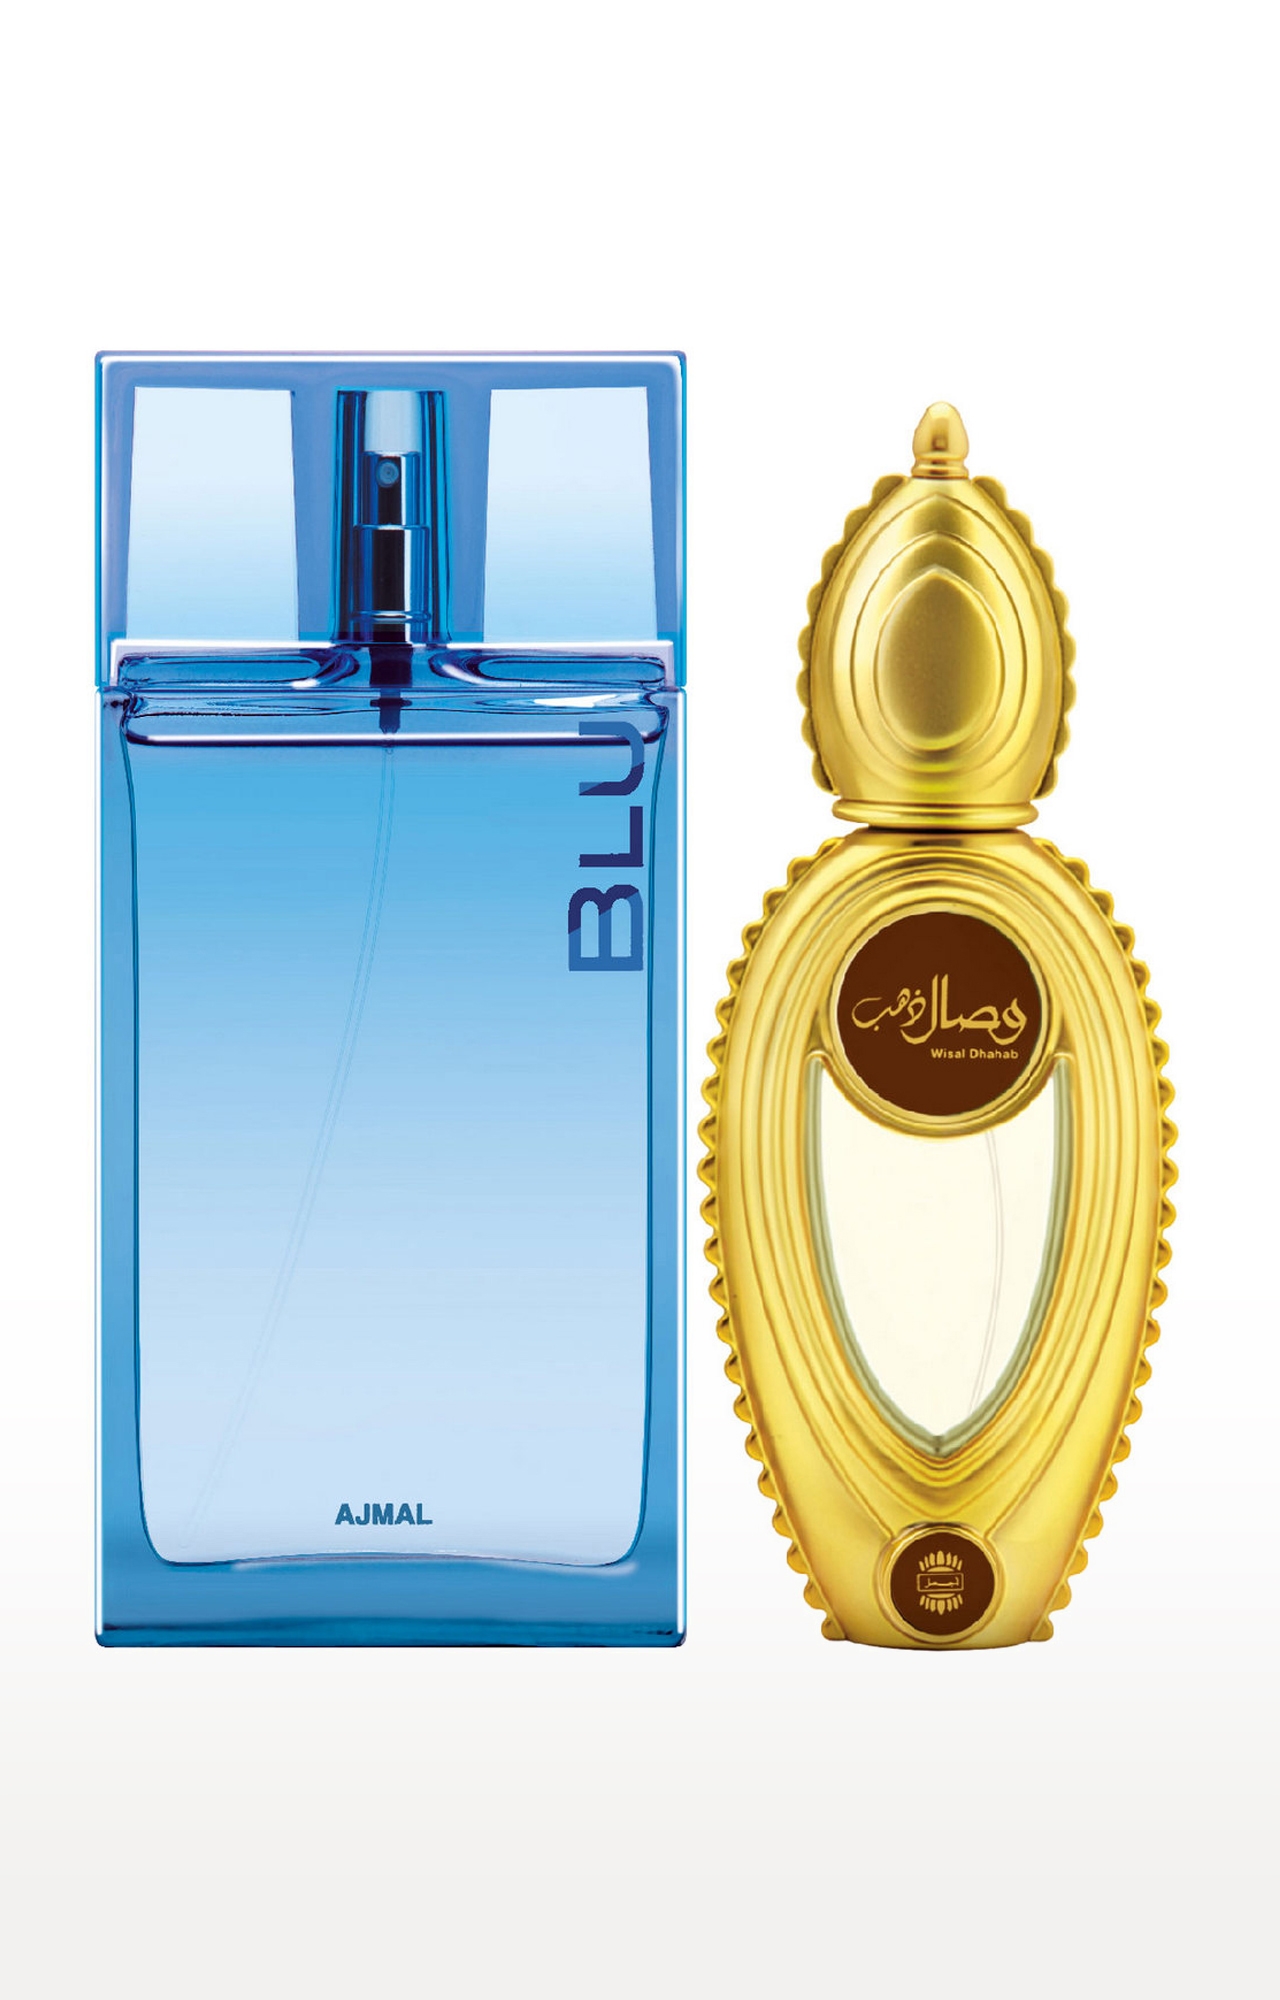 Ajmal | Ajmal Blu EDP Aquatic Woody Perfume 90ml for Men and Wisal Dhahab EDP Fruity Floral Perfume 50ml for Men + 2 Parfum Testers FREE